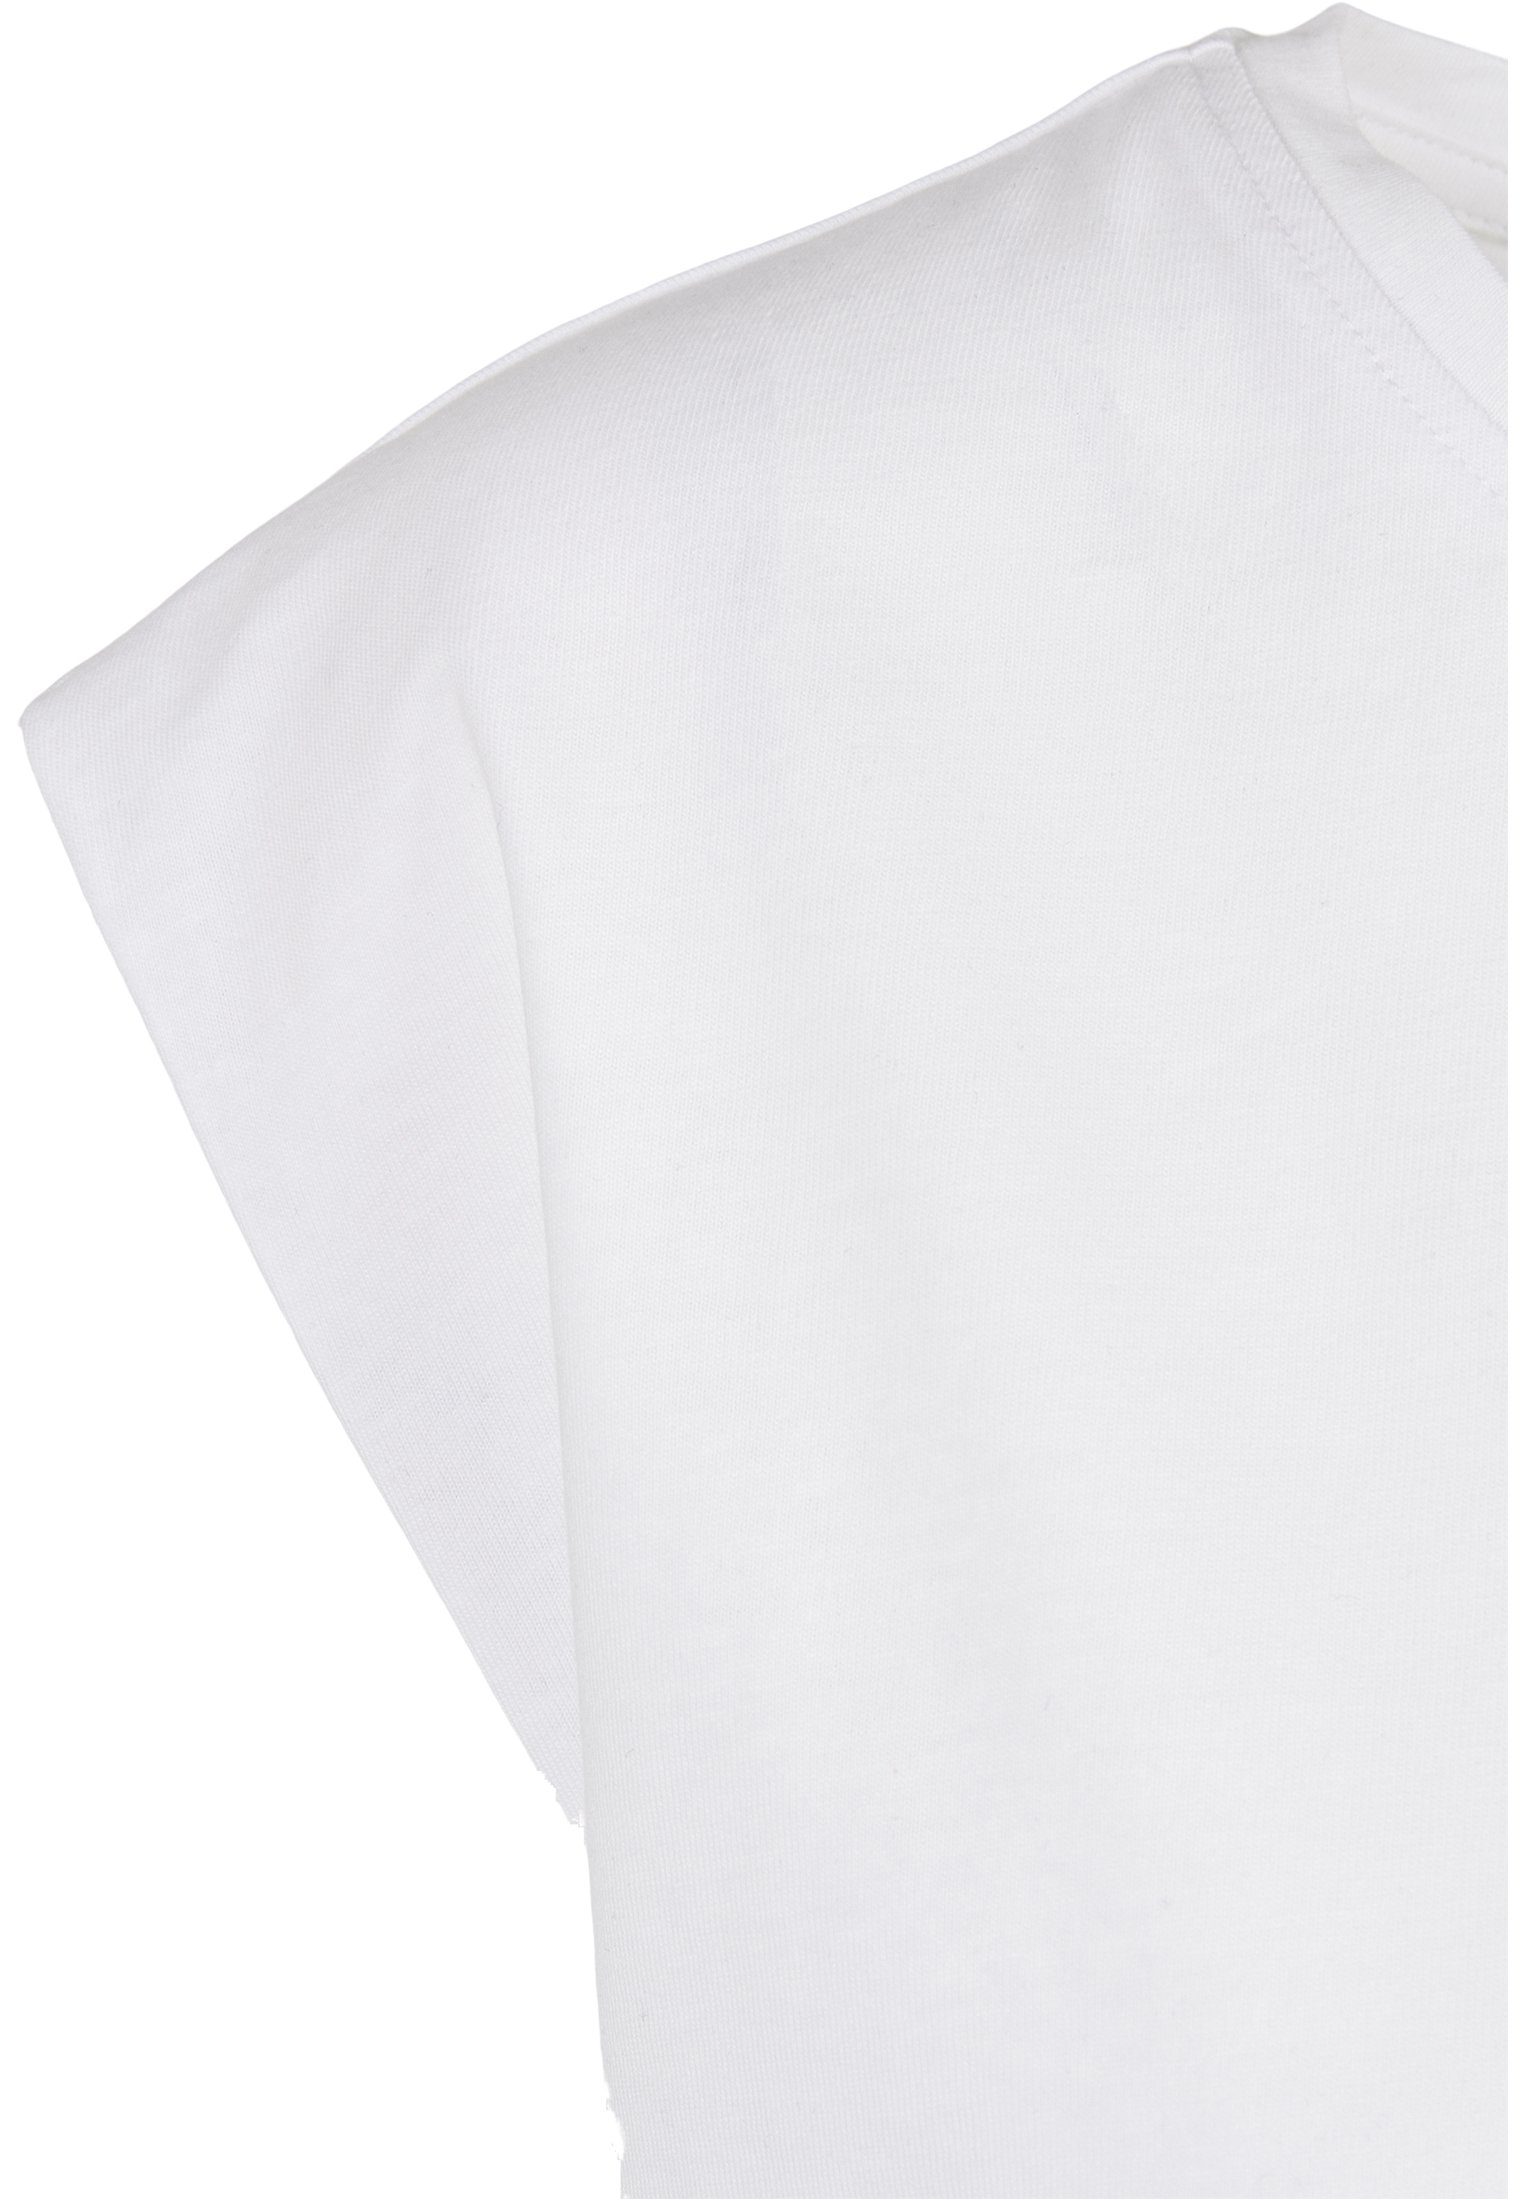 (1-tlg) Ladies Damen CLASSICS URBAN Short T-Shirt white Tee Organic